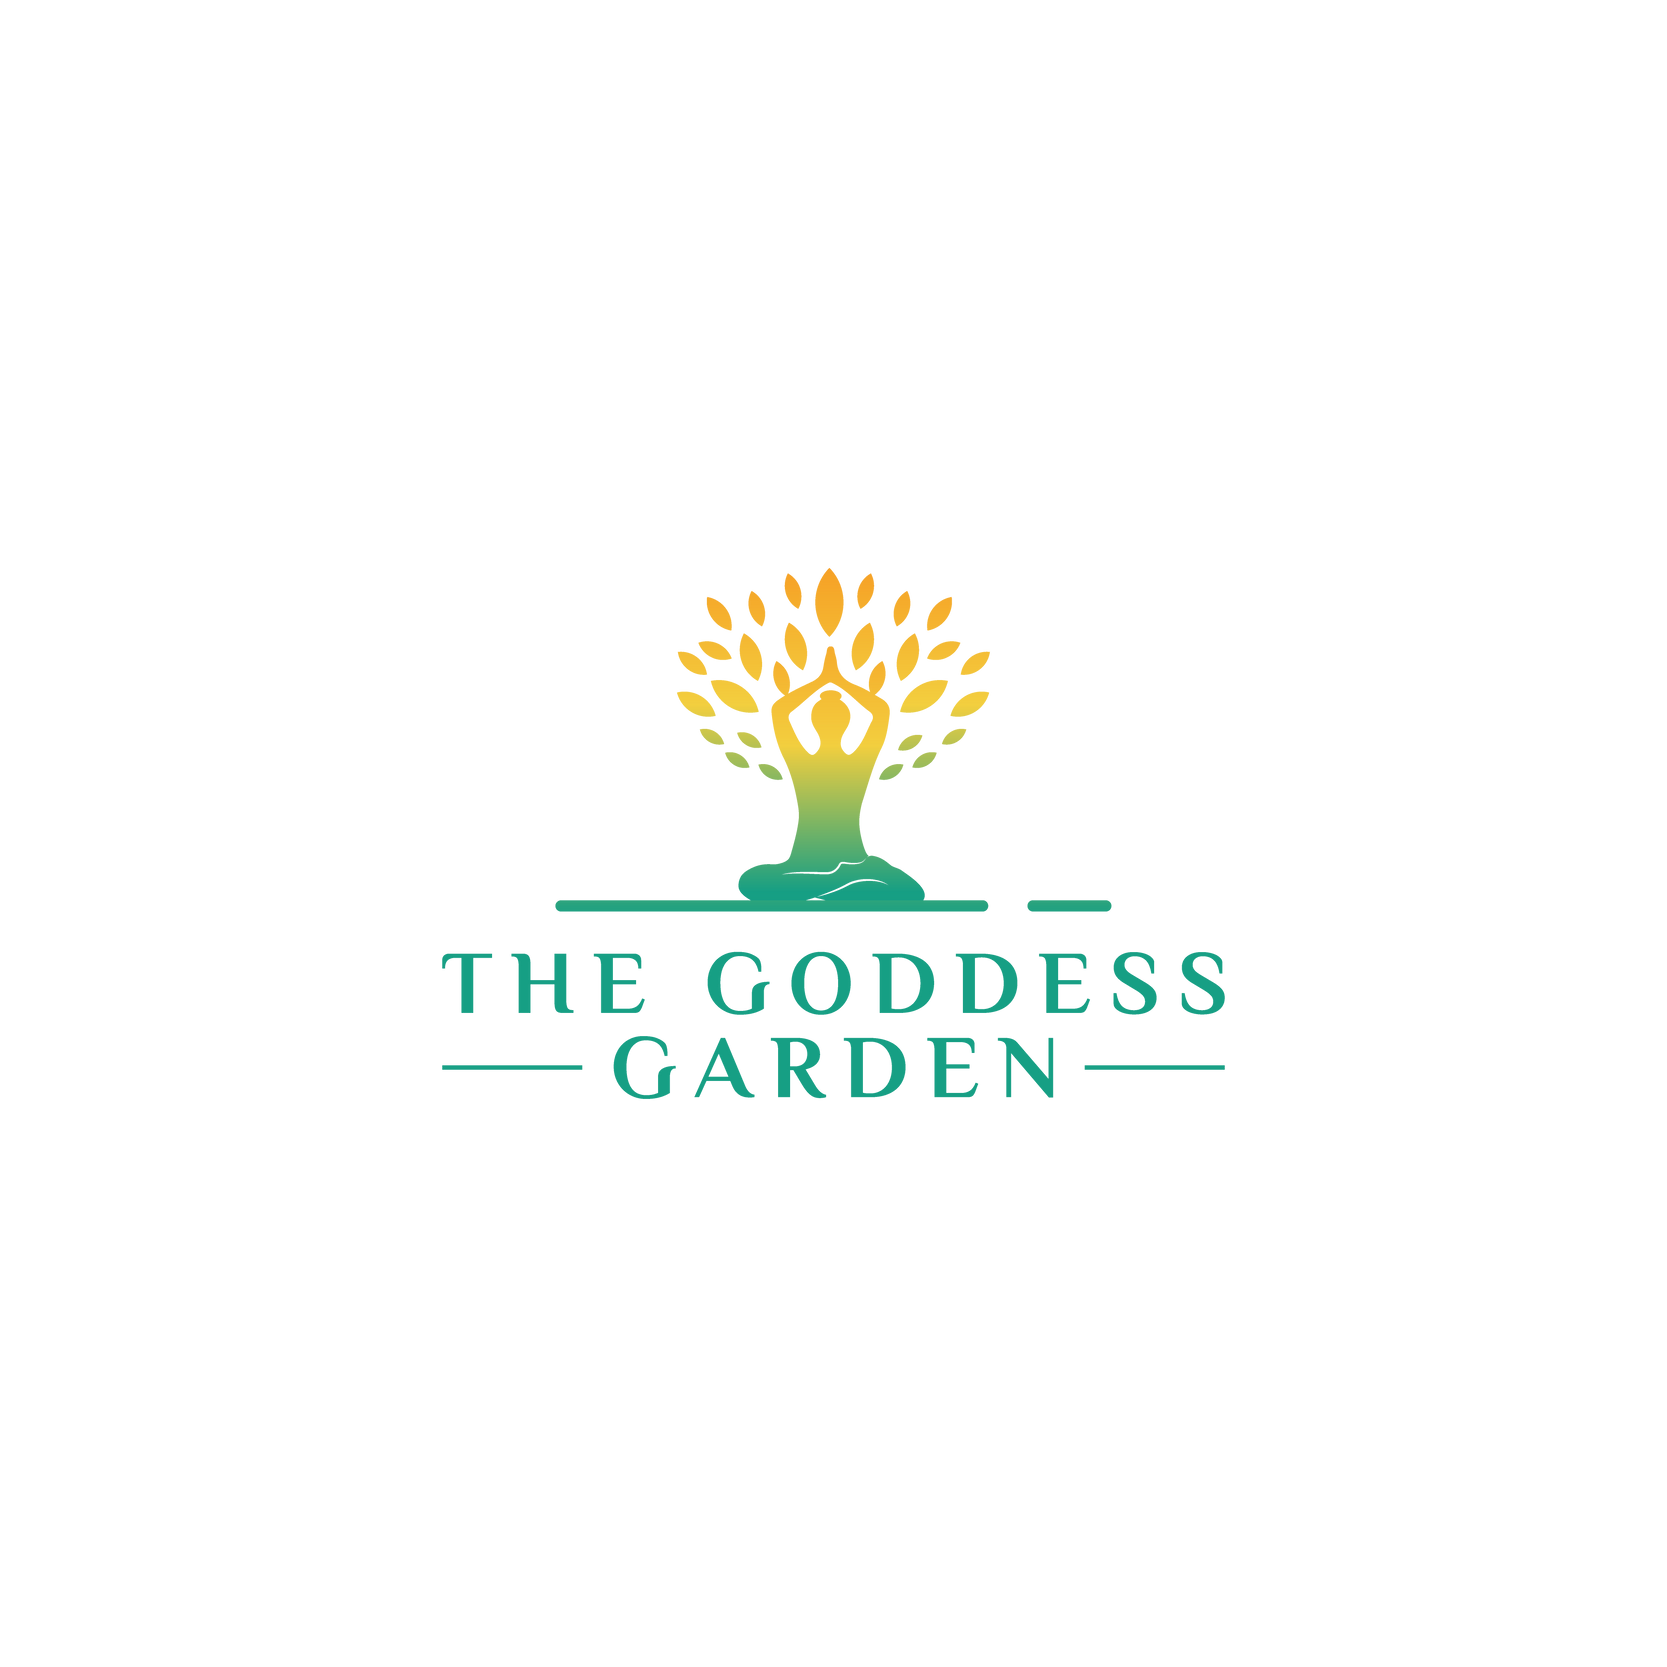 The Goddess Garden Retreat and Wellness Center logo, located in Cahuita, Costa Rica